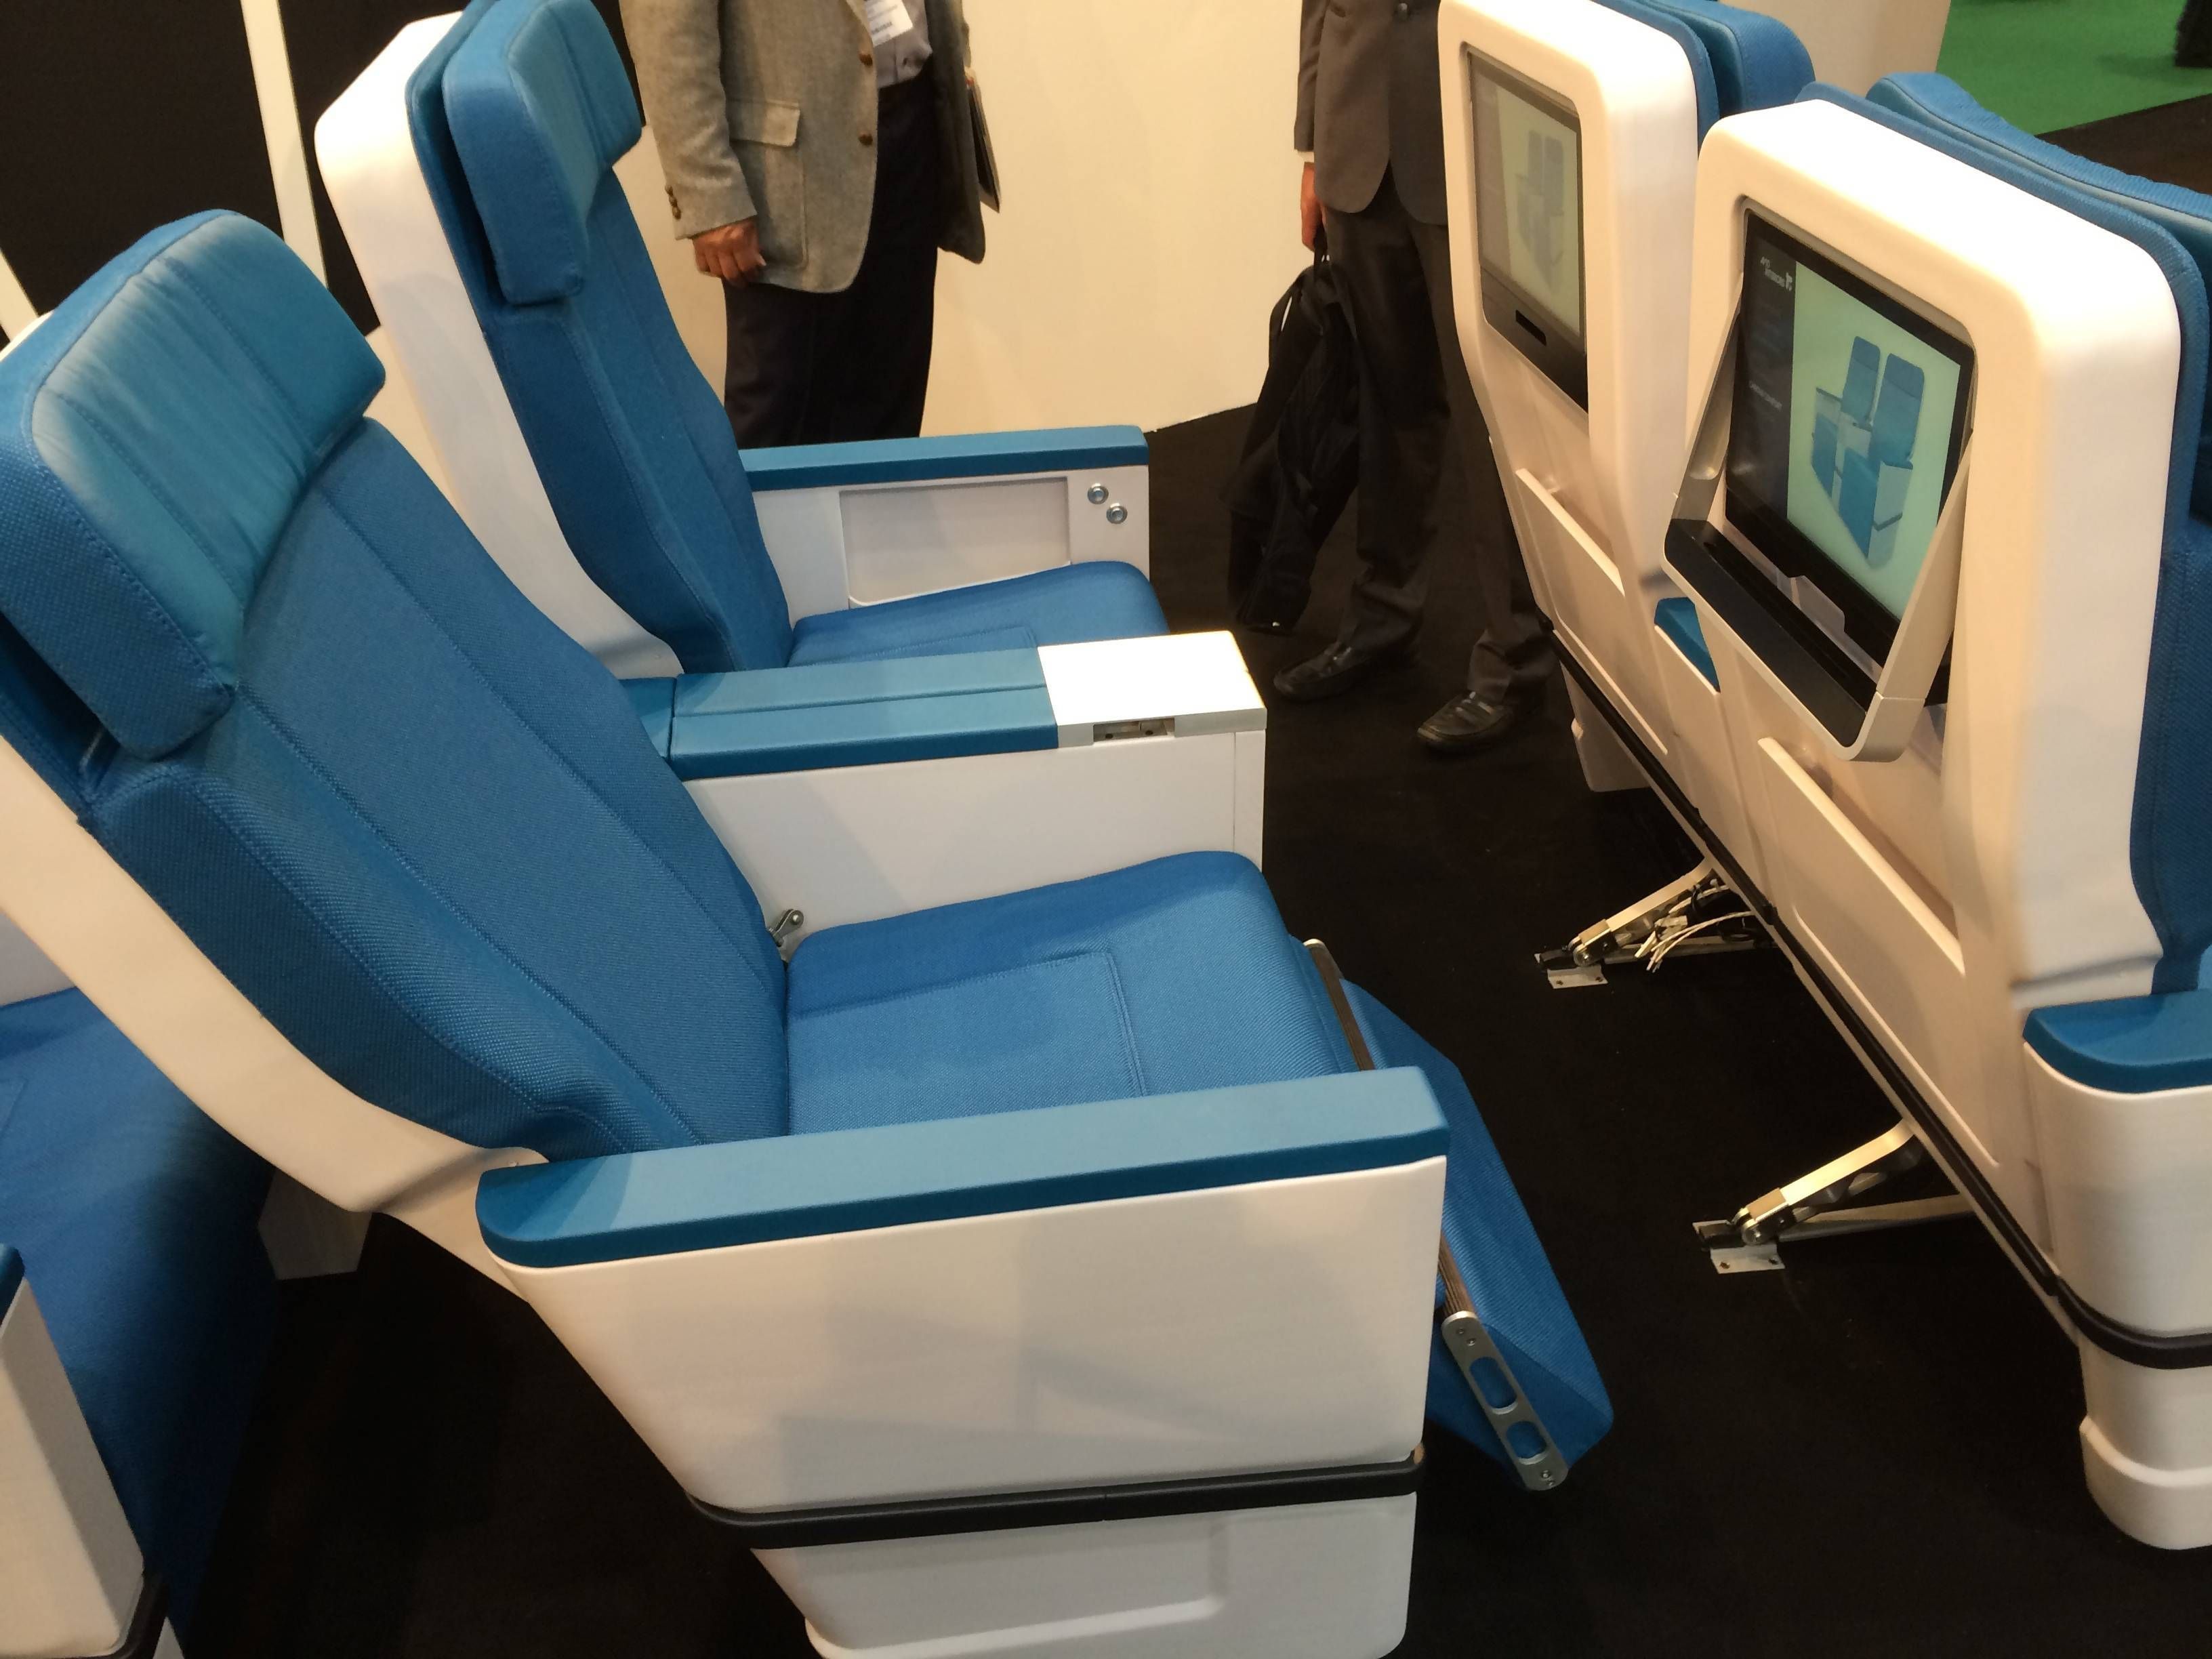 aix2014 - passageirodeprimeira aircraft interior expo